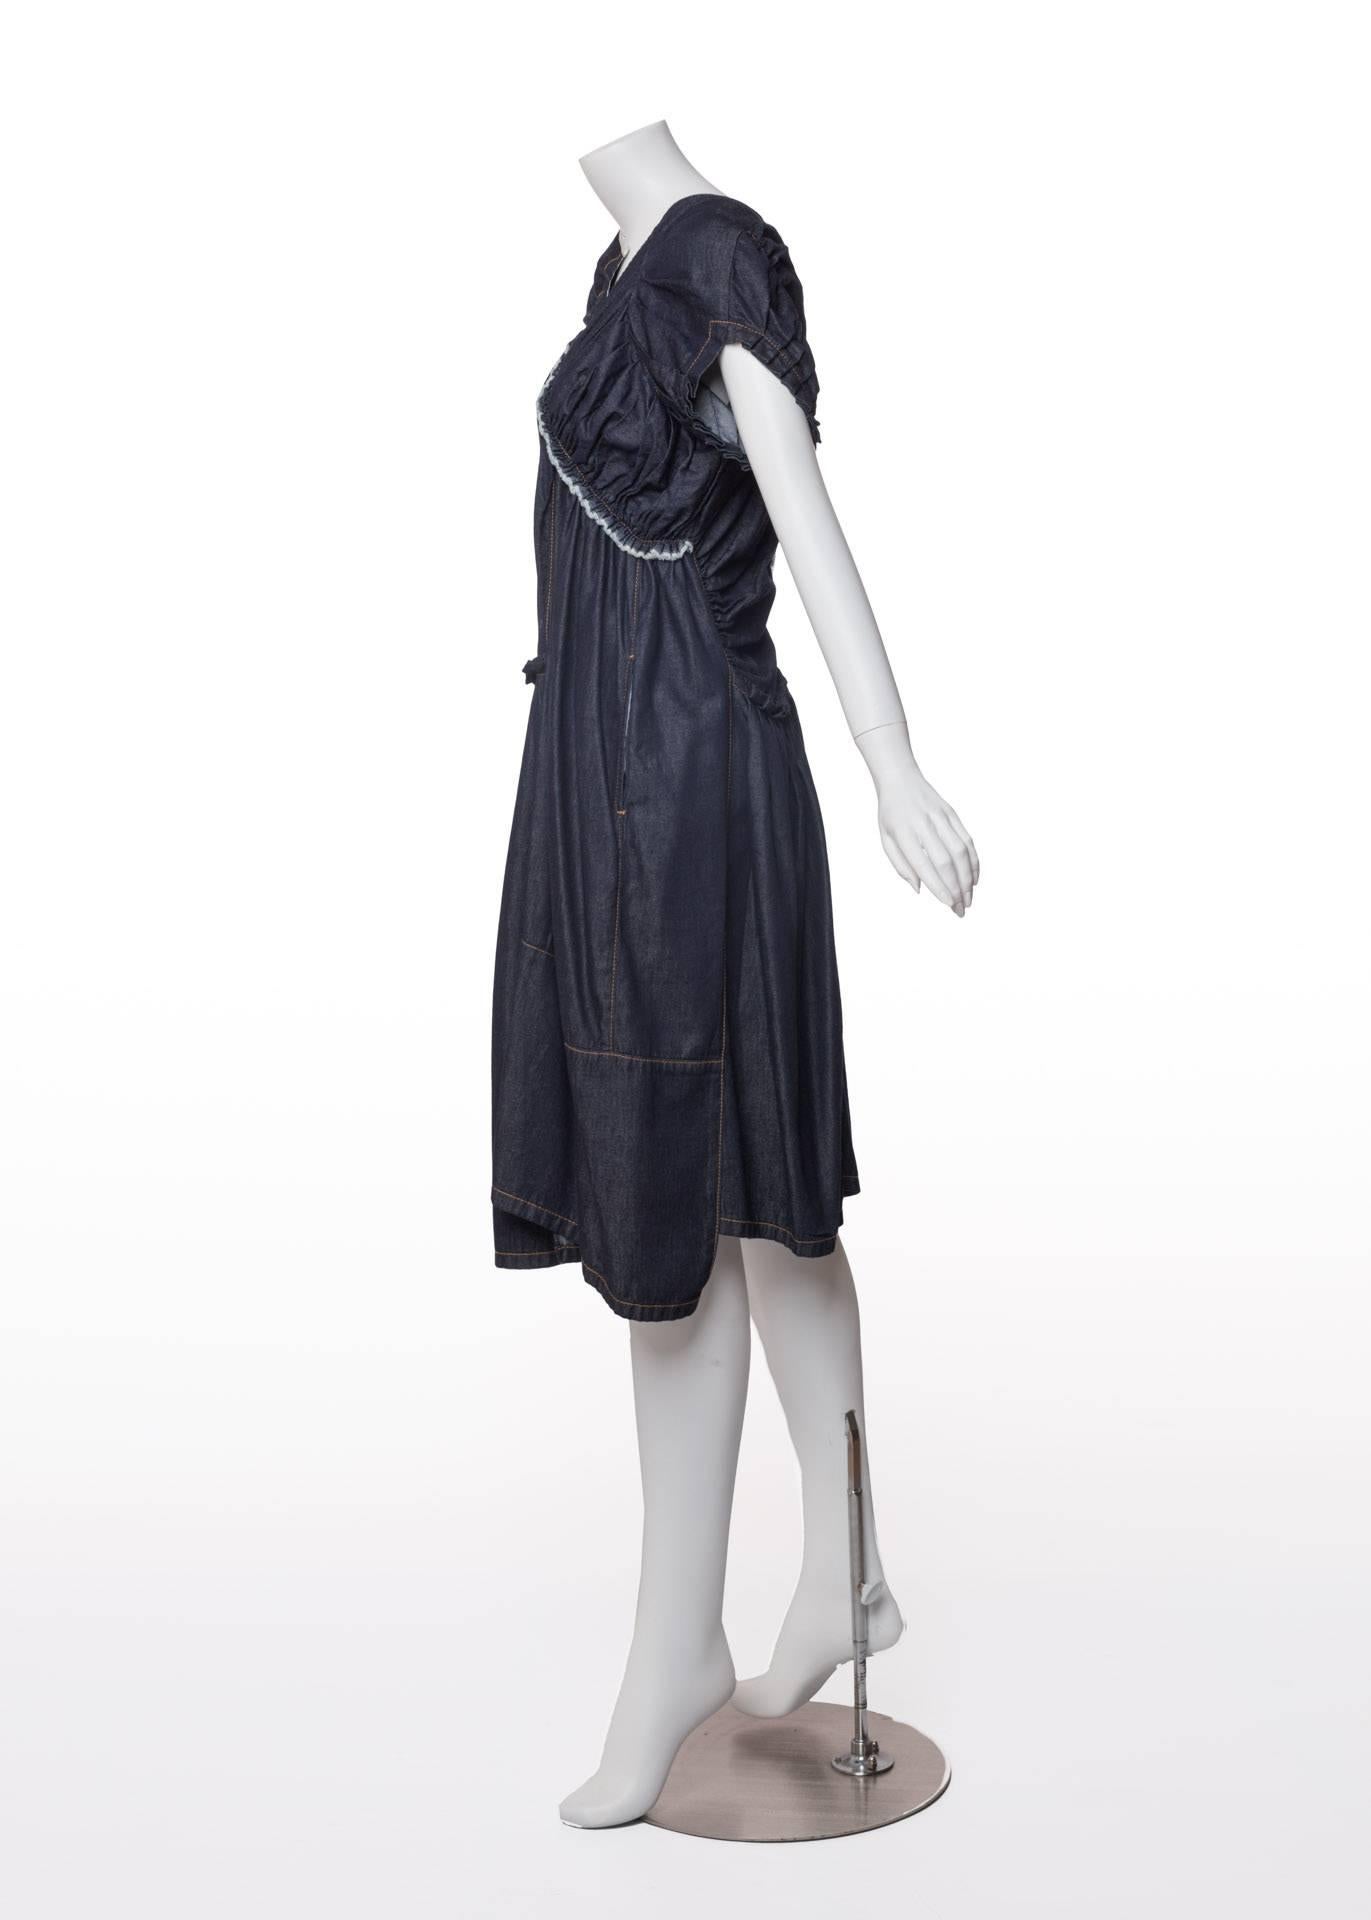   Comme des Garcons  Short Sleeve Sculpted Pleats  Denim Dress In Excellent Condition For Sale In Boca Raton, FL